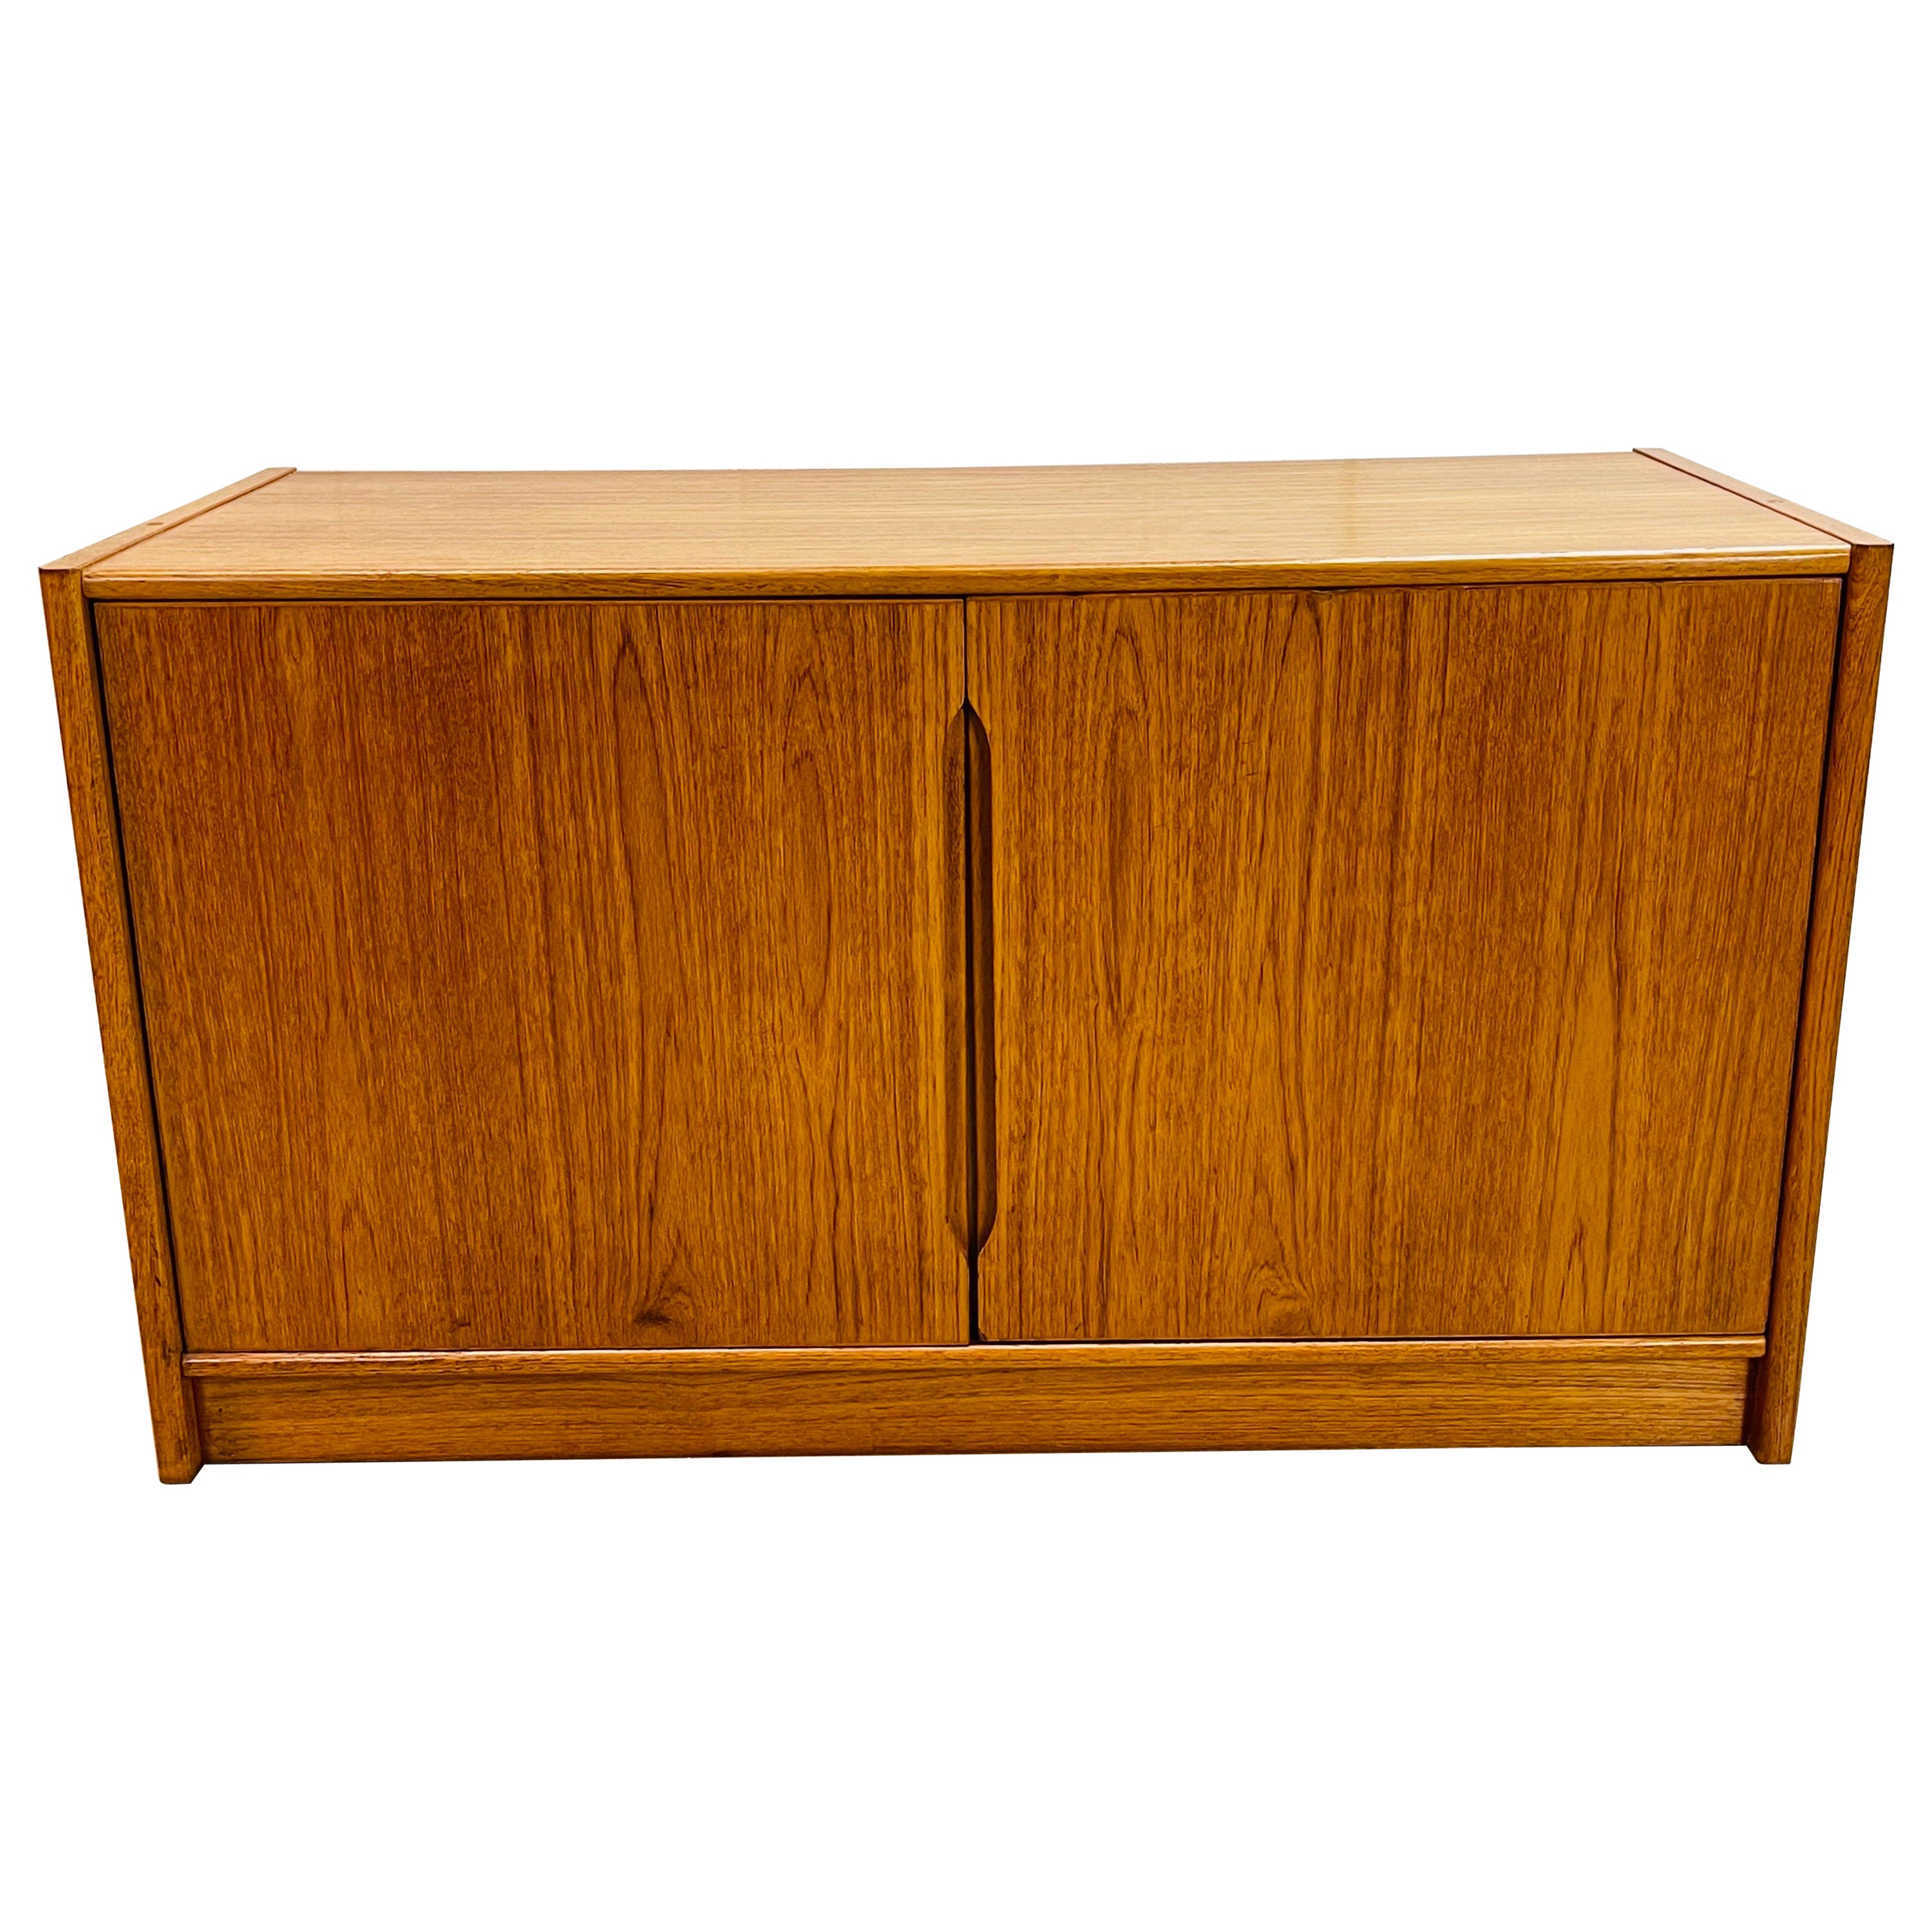 1970s Danish Teak Wood Storage Cabinet For Sale